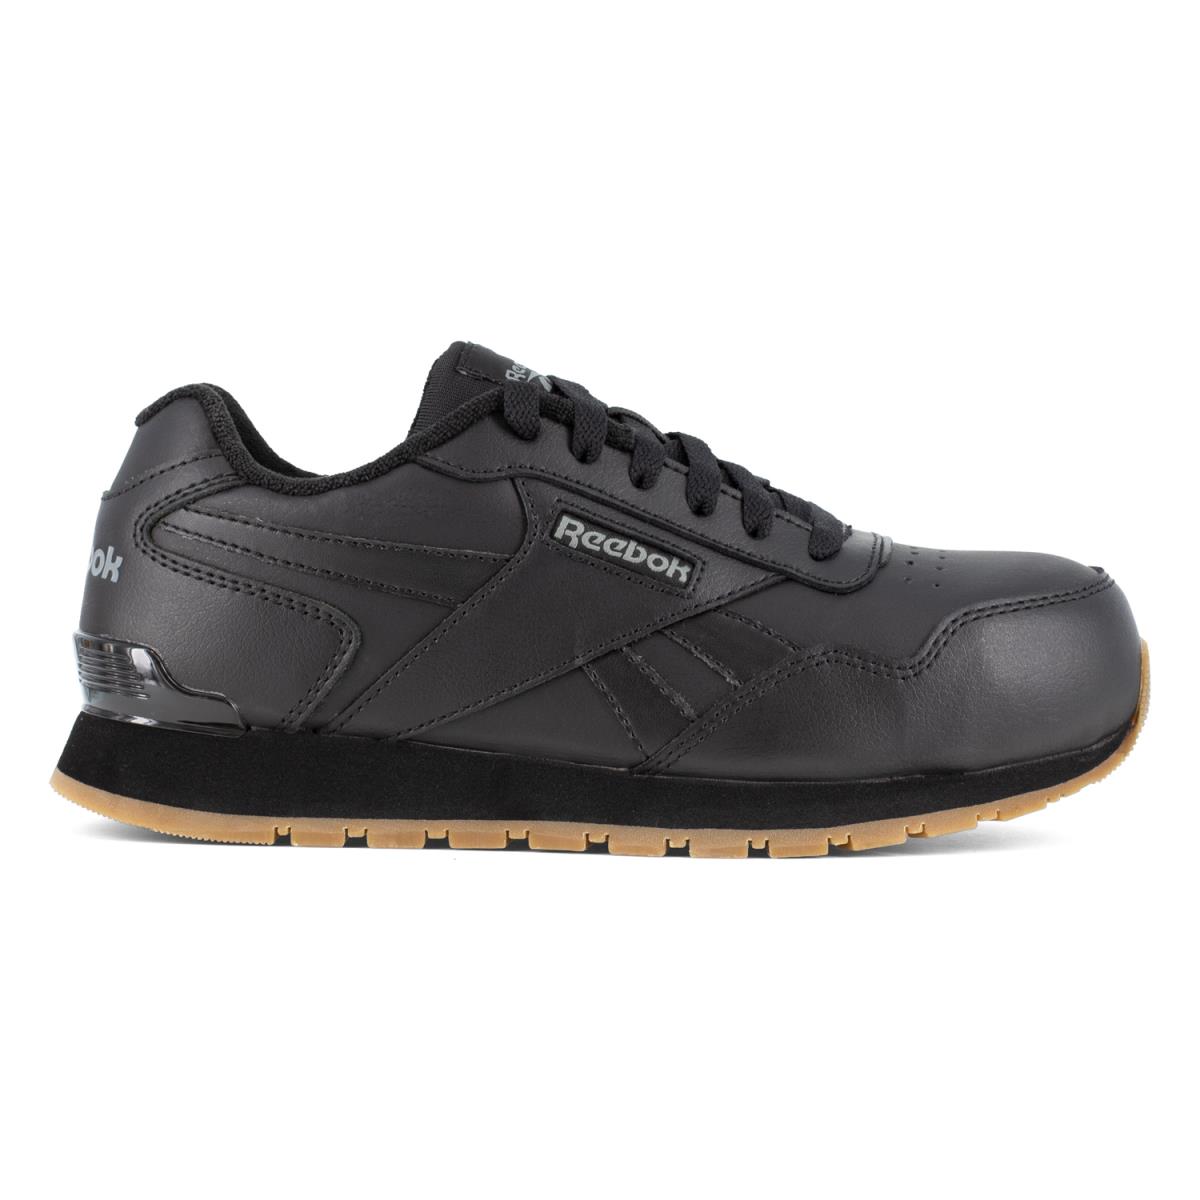 Reebok Mens Black Leather Work Shoes Harman Classic Sneaker CT M